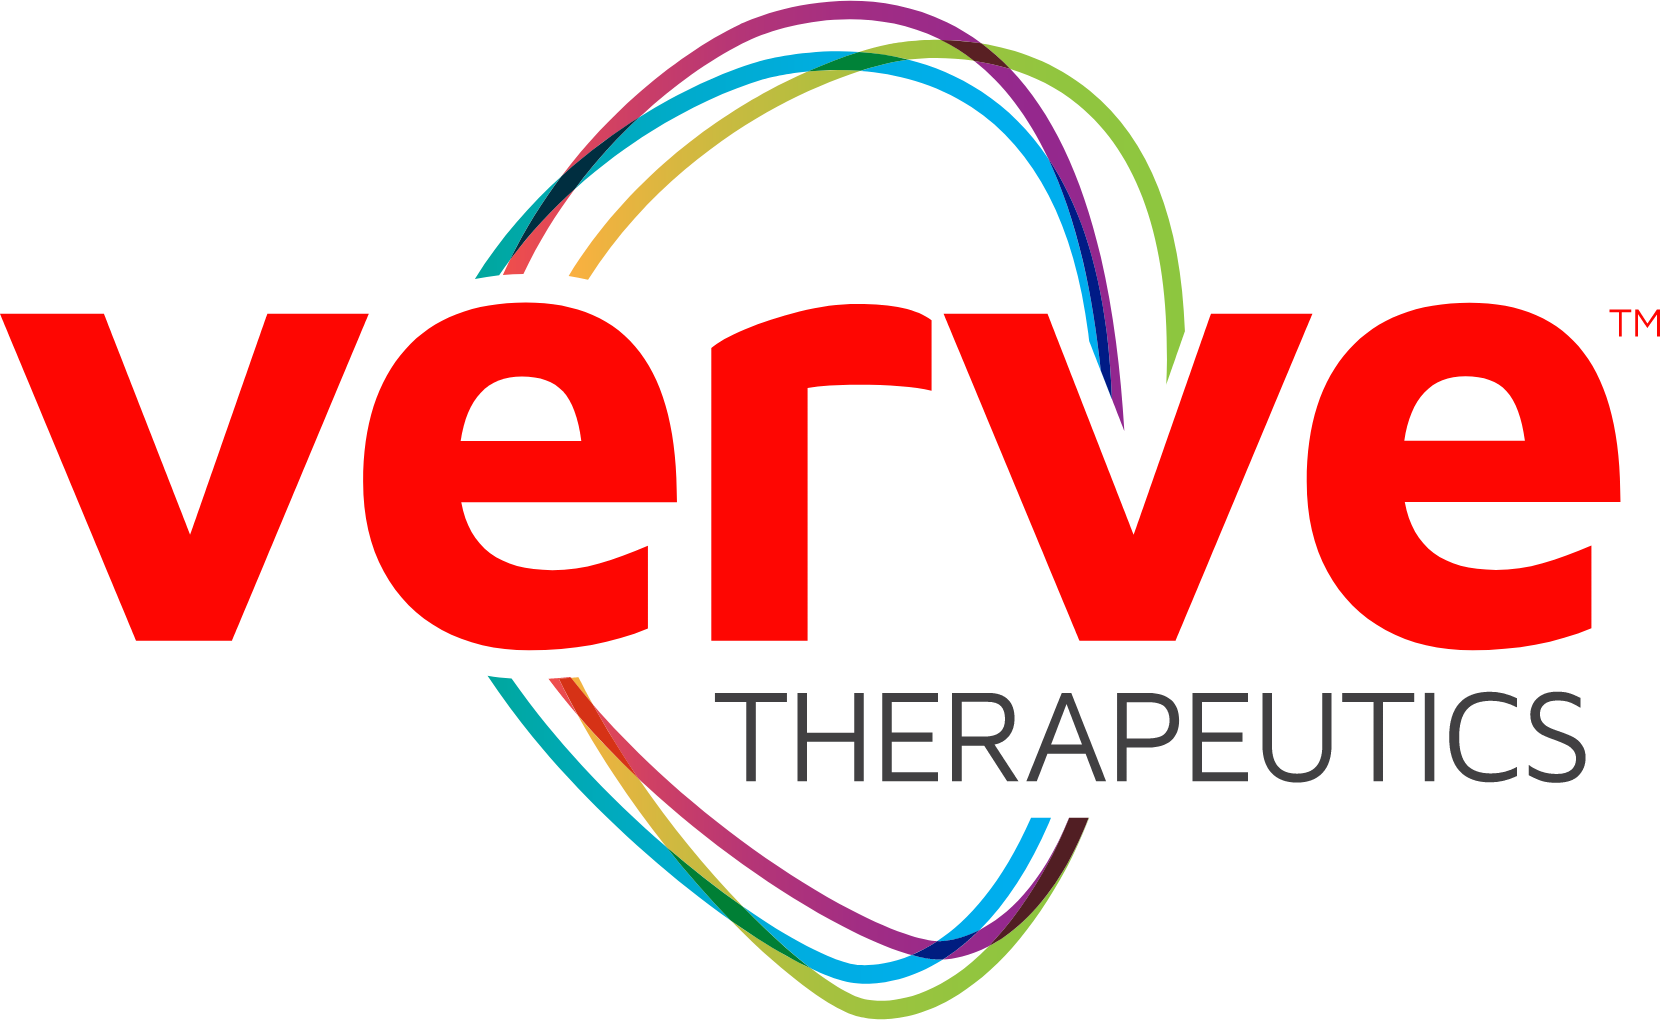 Verve Therapeutics logo large (transparent PNG)